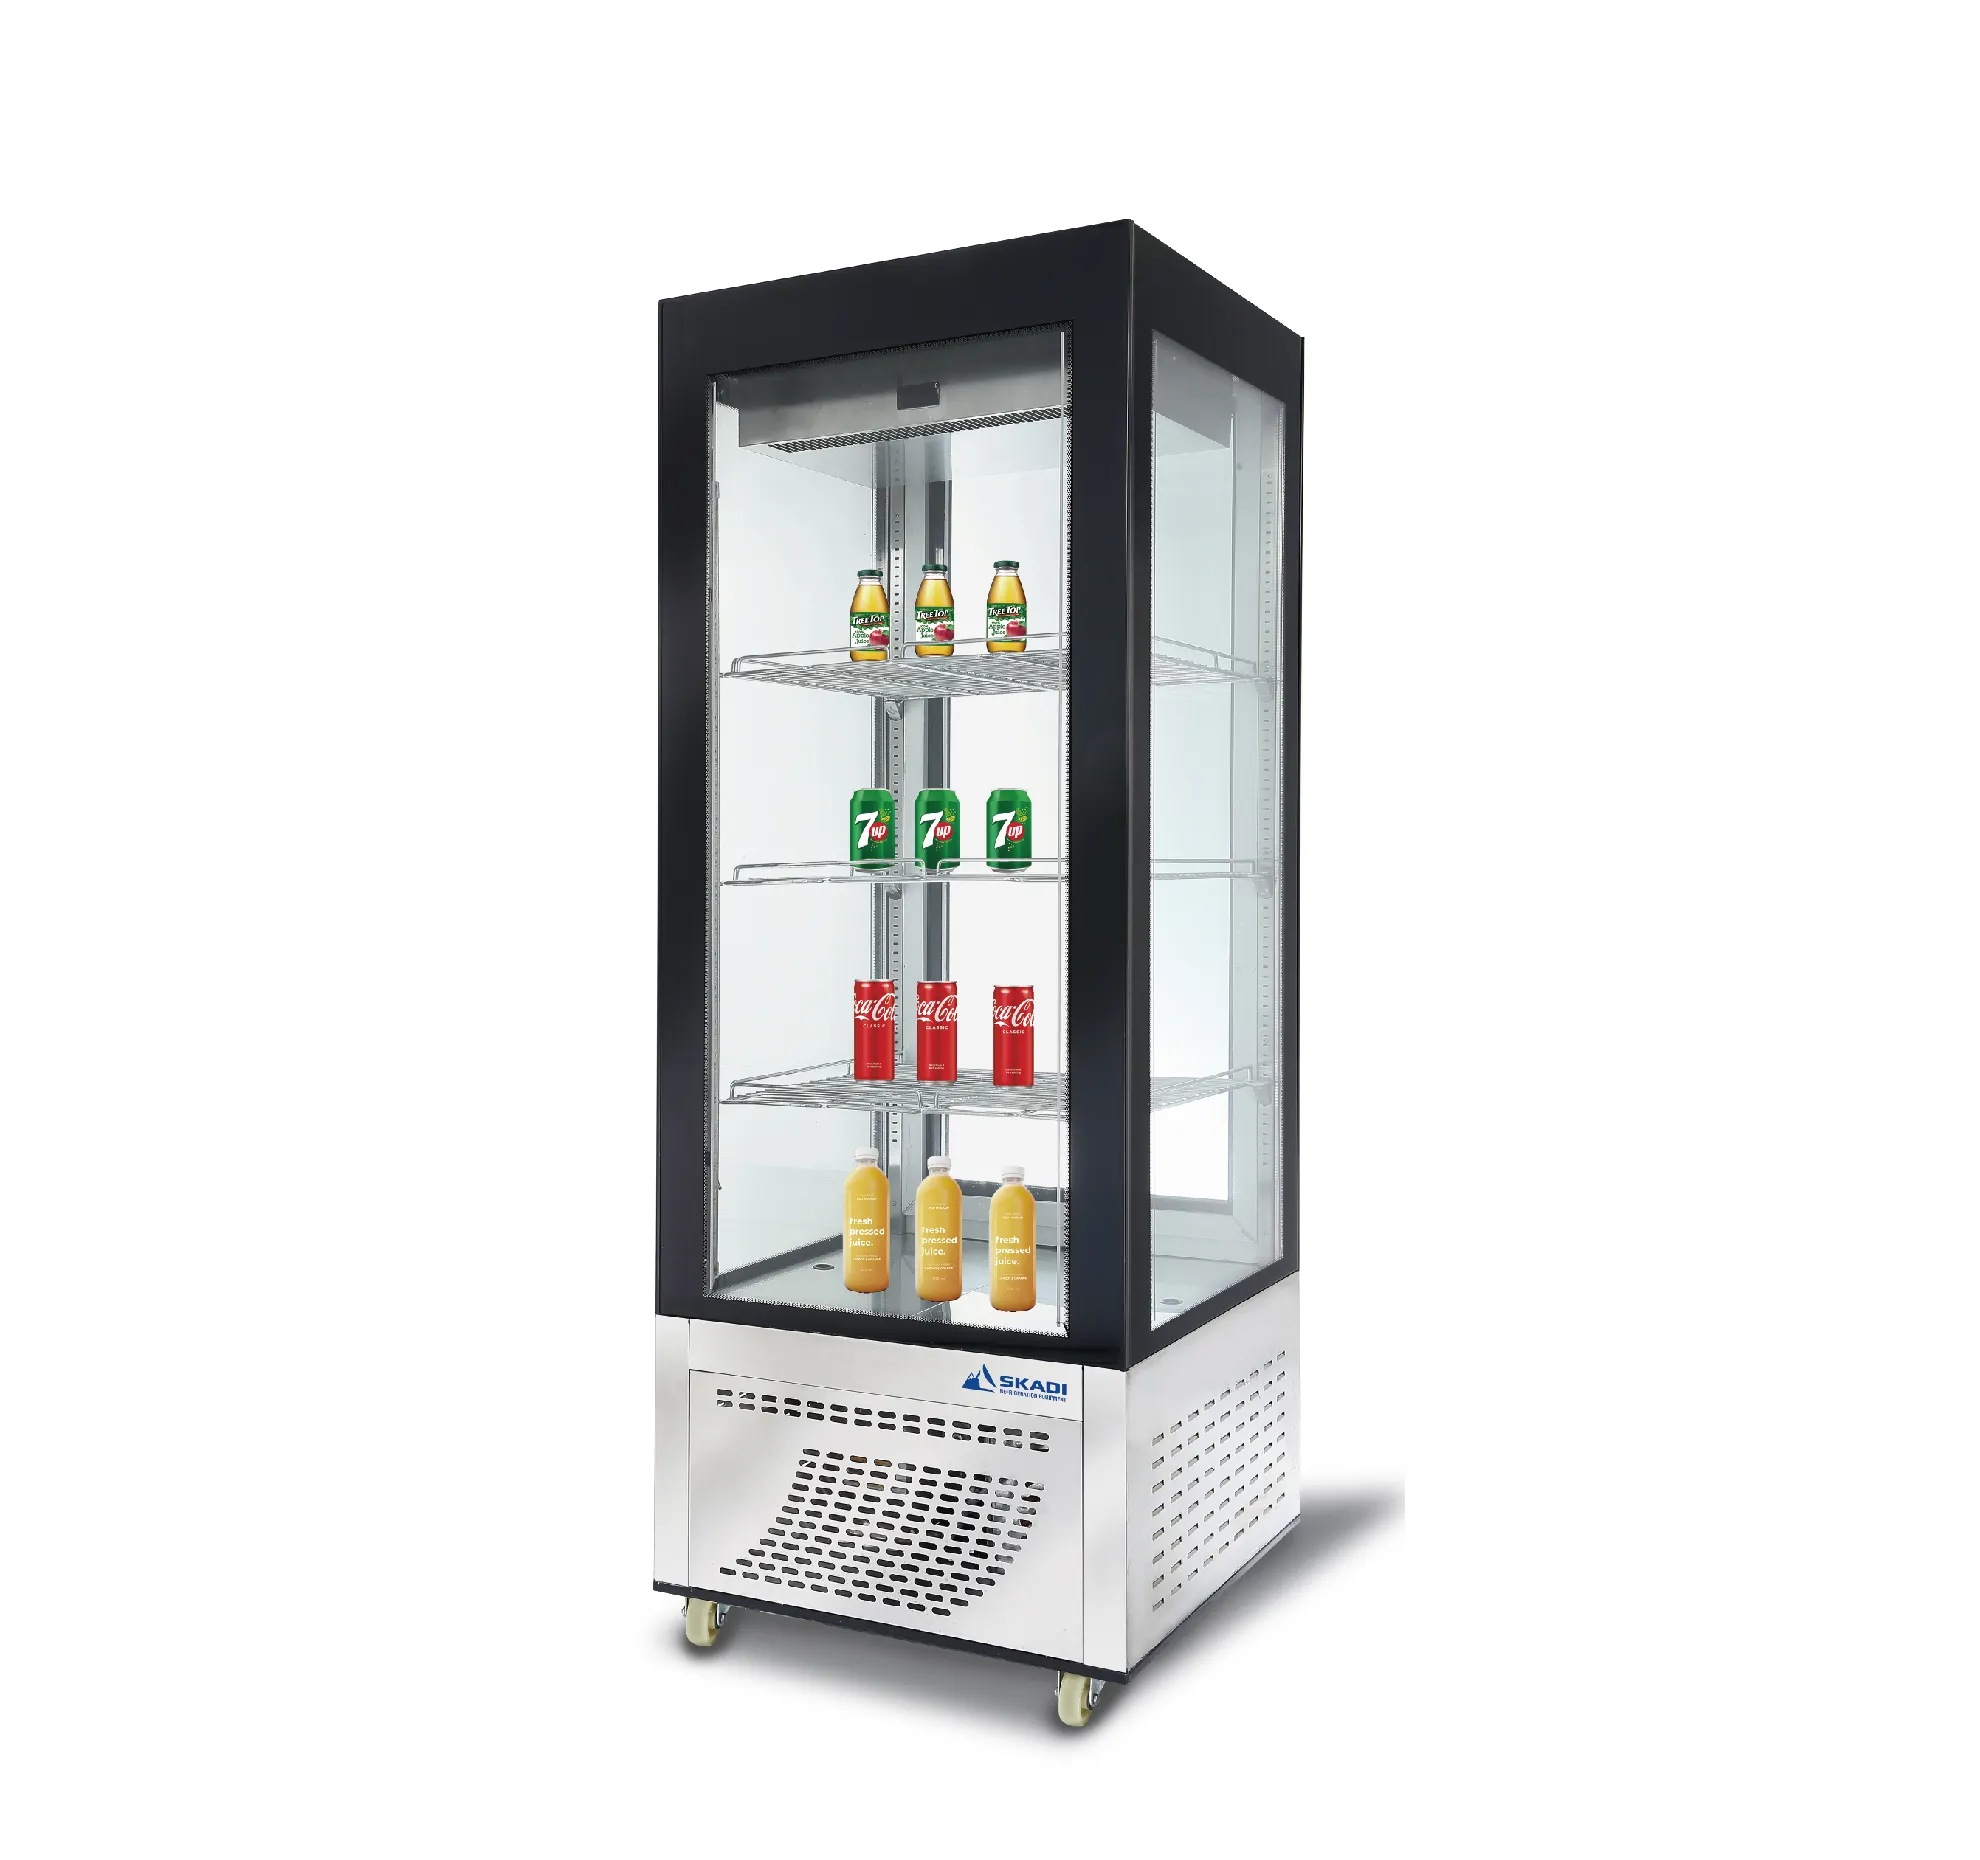 Upright Chiller Manufacture Vertical Refrigeration Equipment